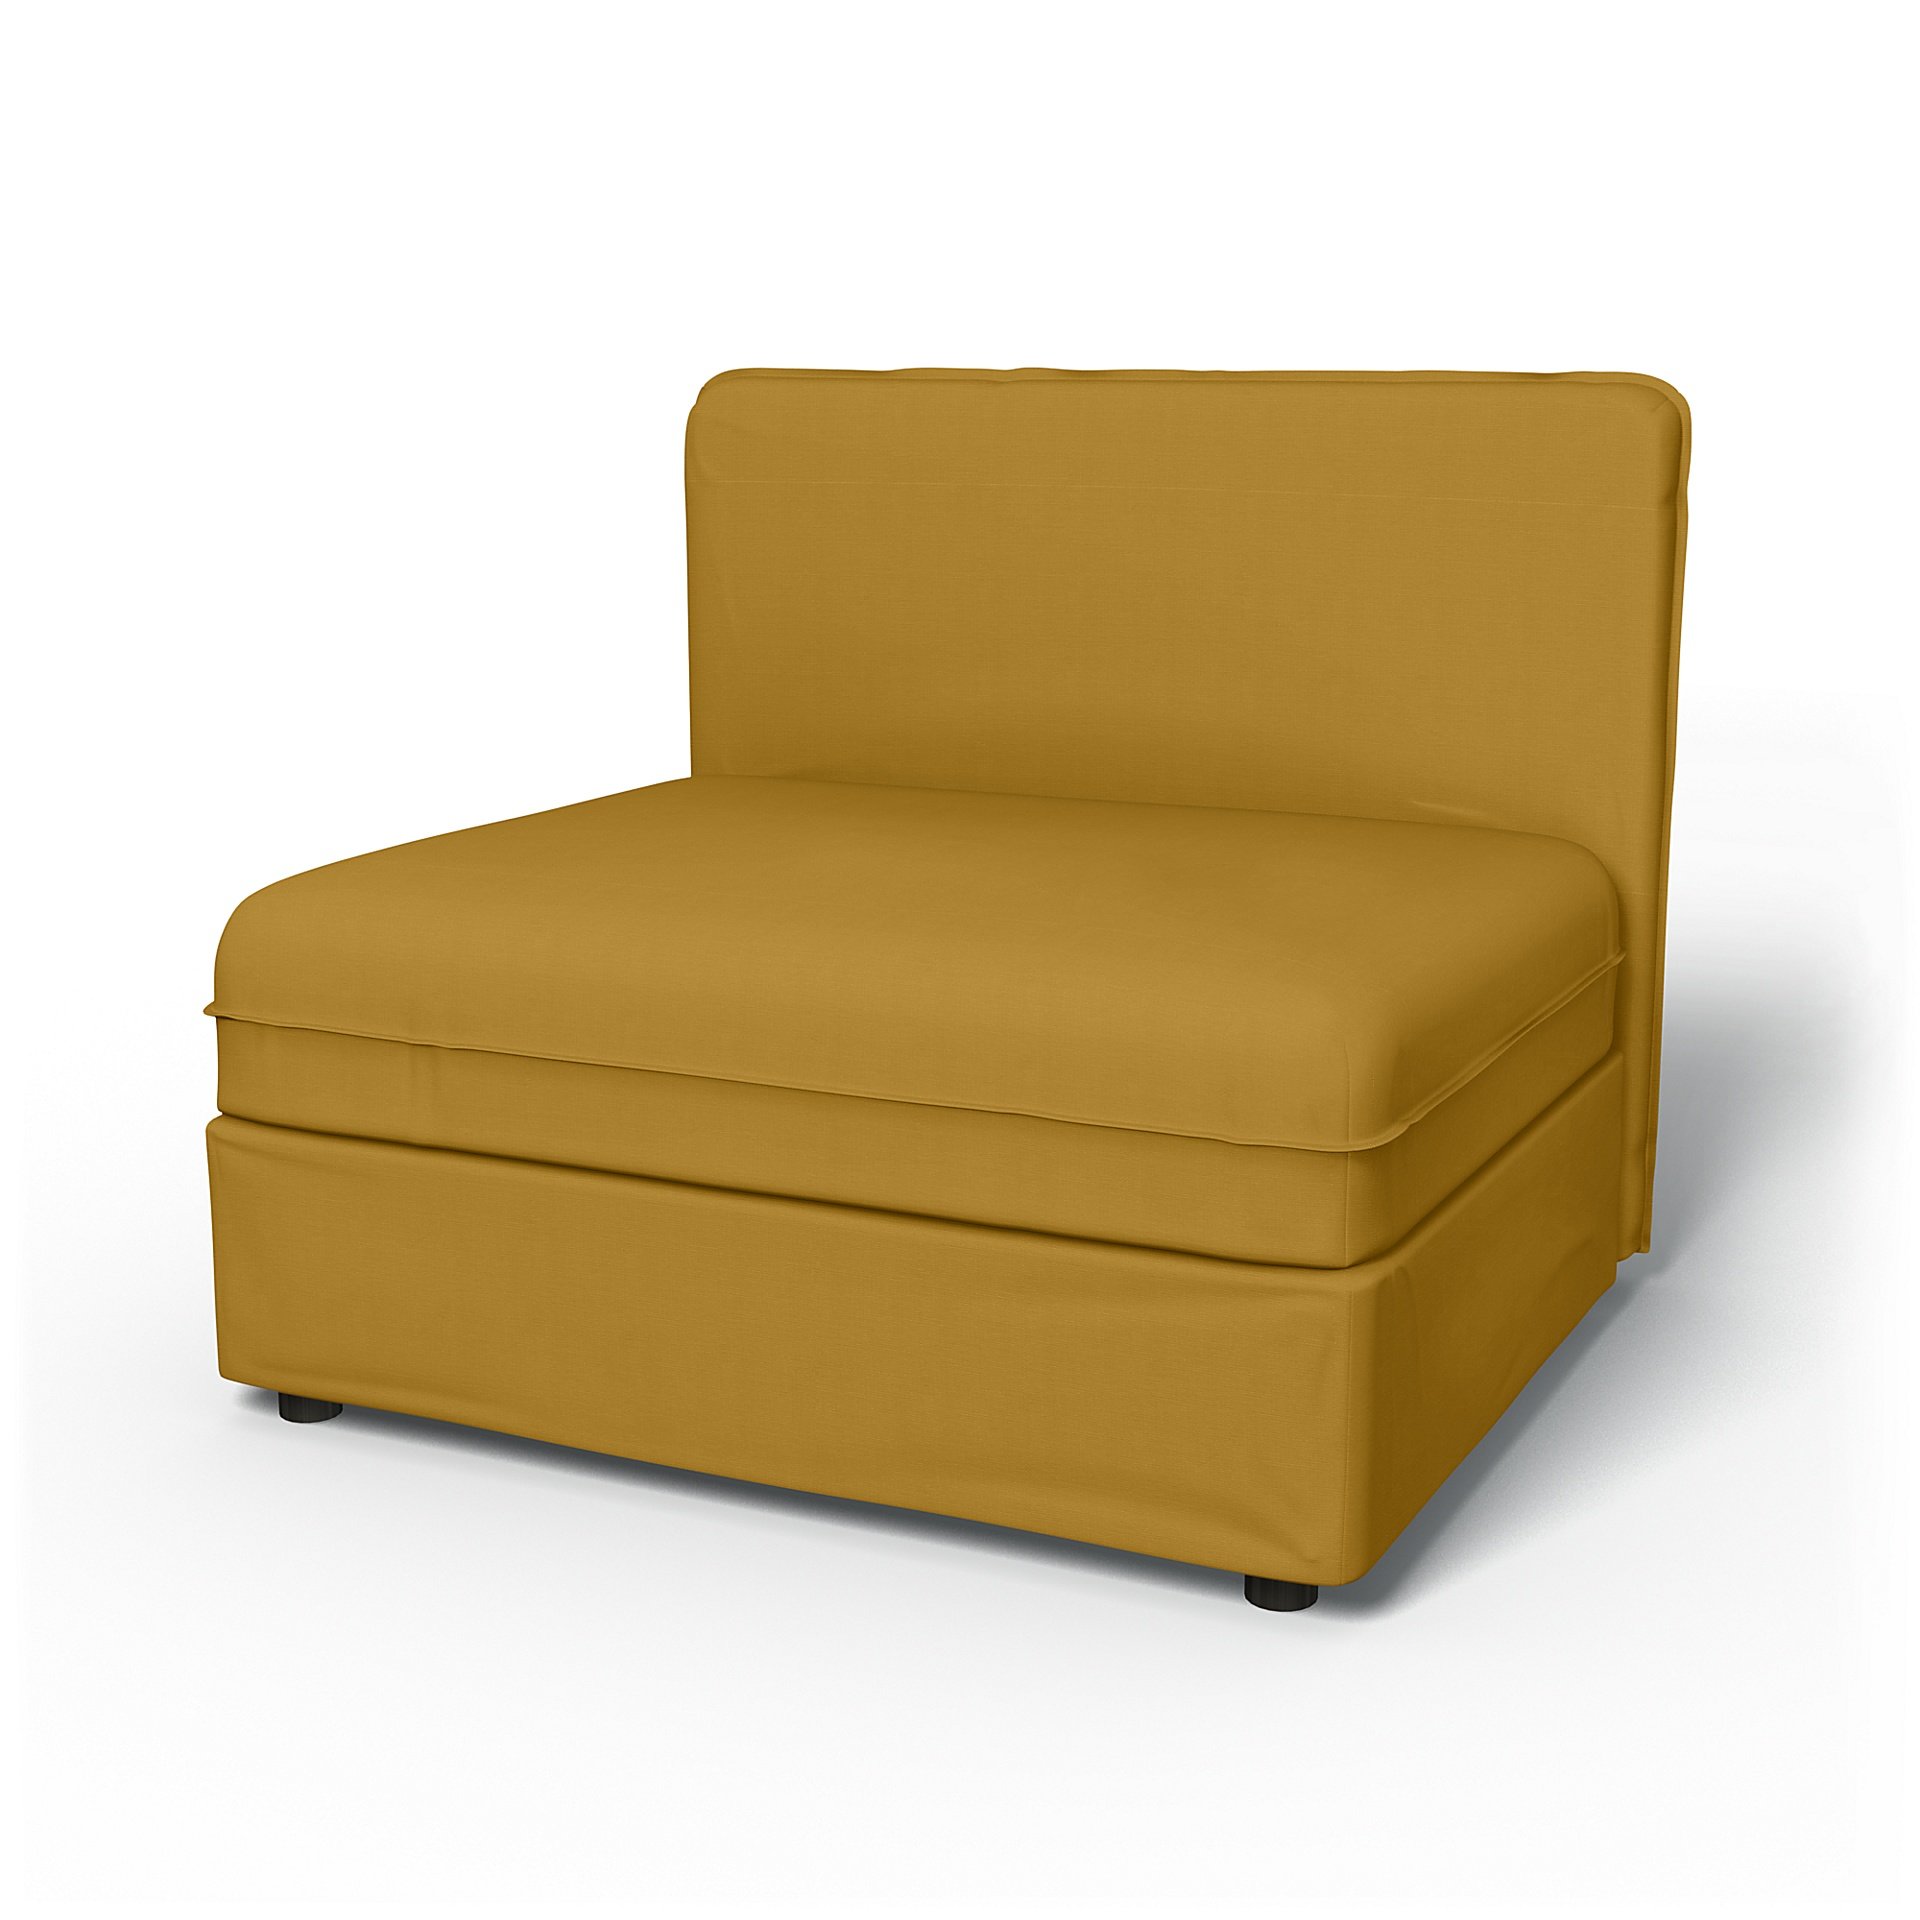 IKEA - Vallentuna Seat Module with Low Back Cover 100x80cm 39x32in, Honey Mustard, Cotton - Bemz